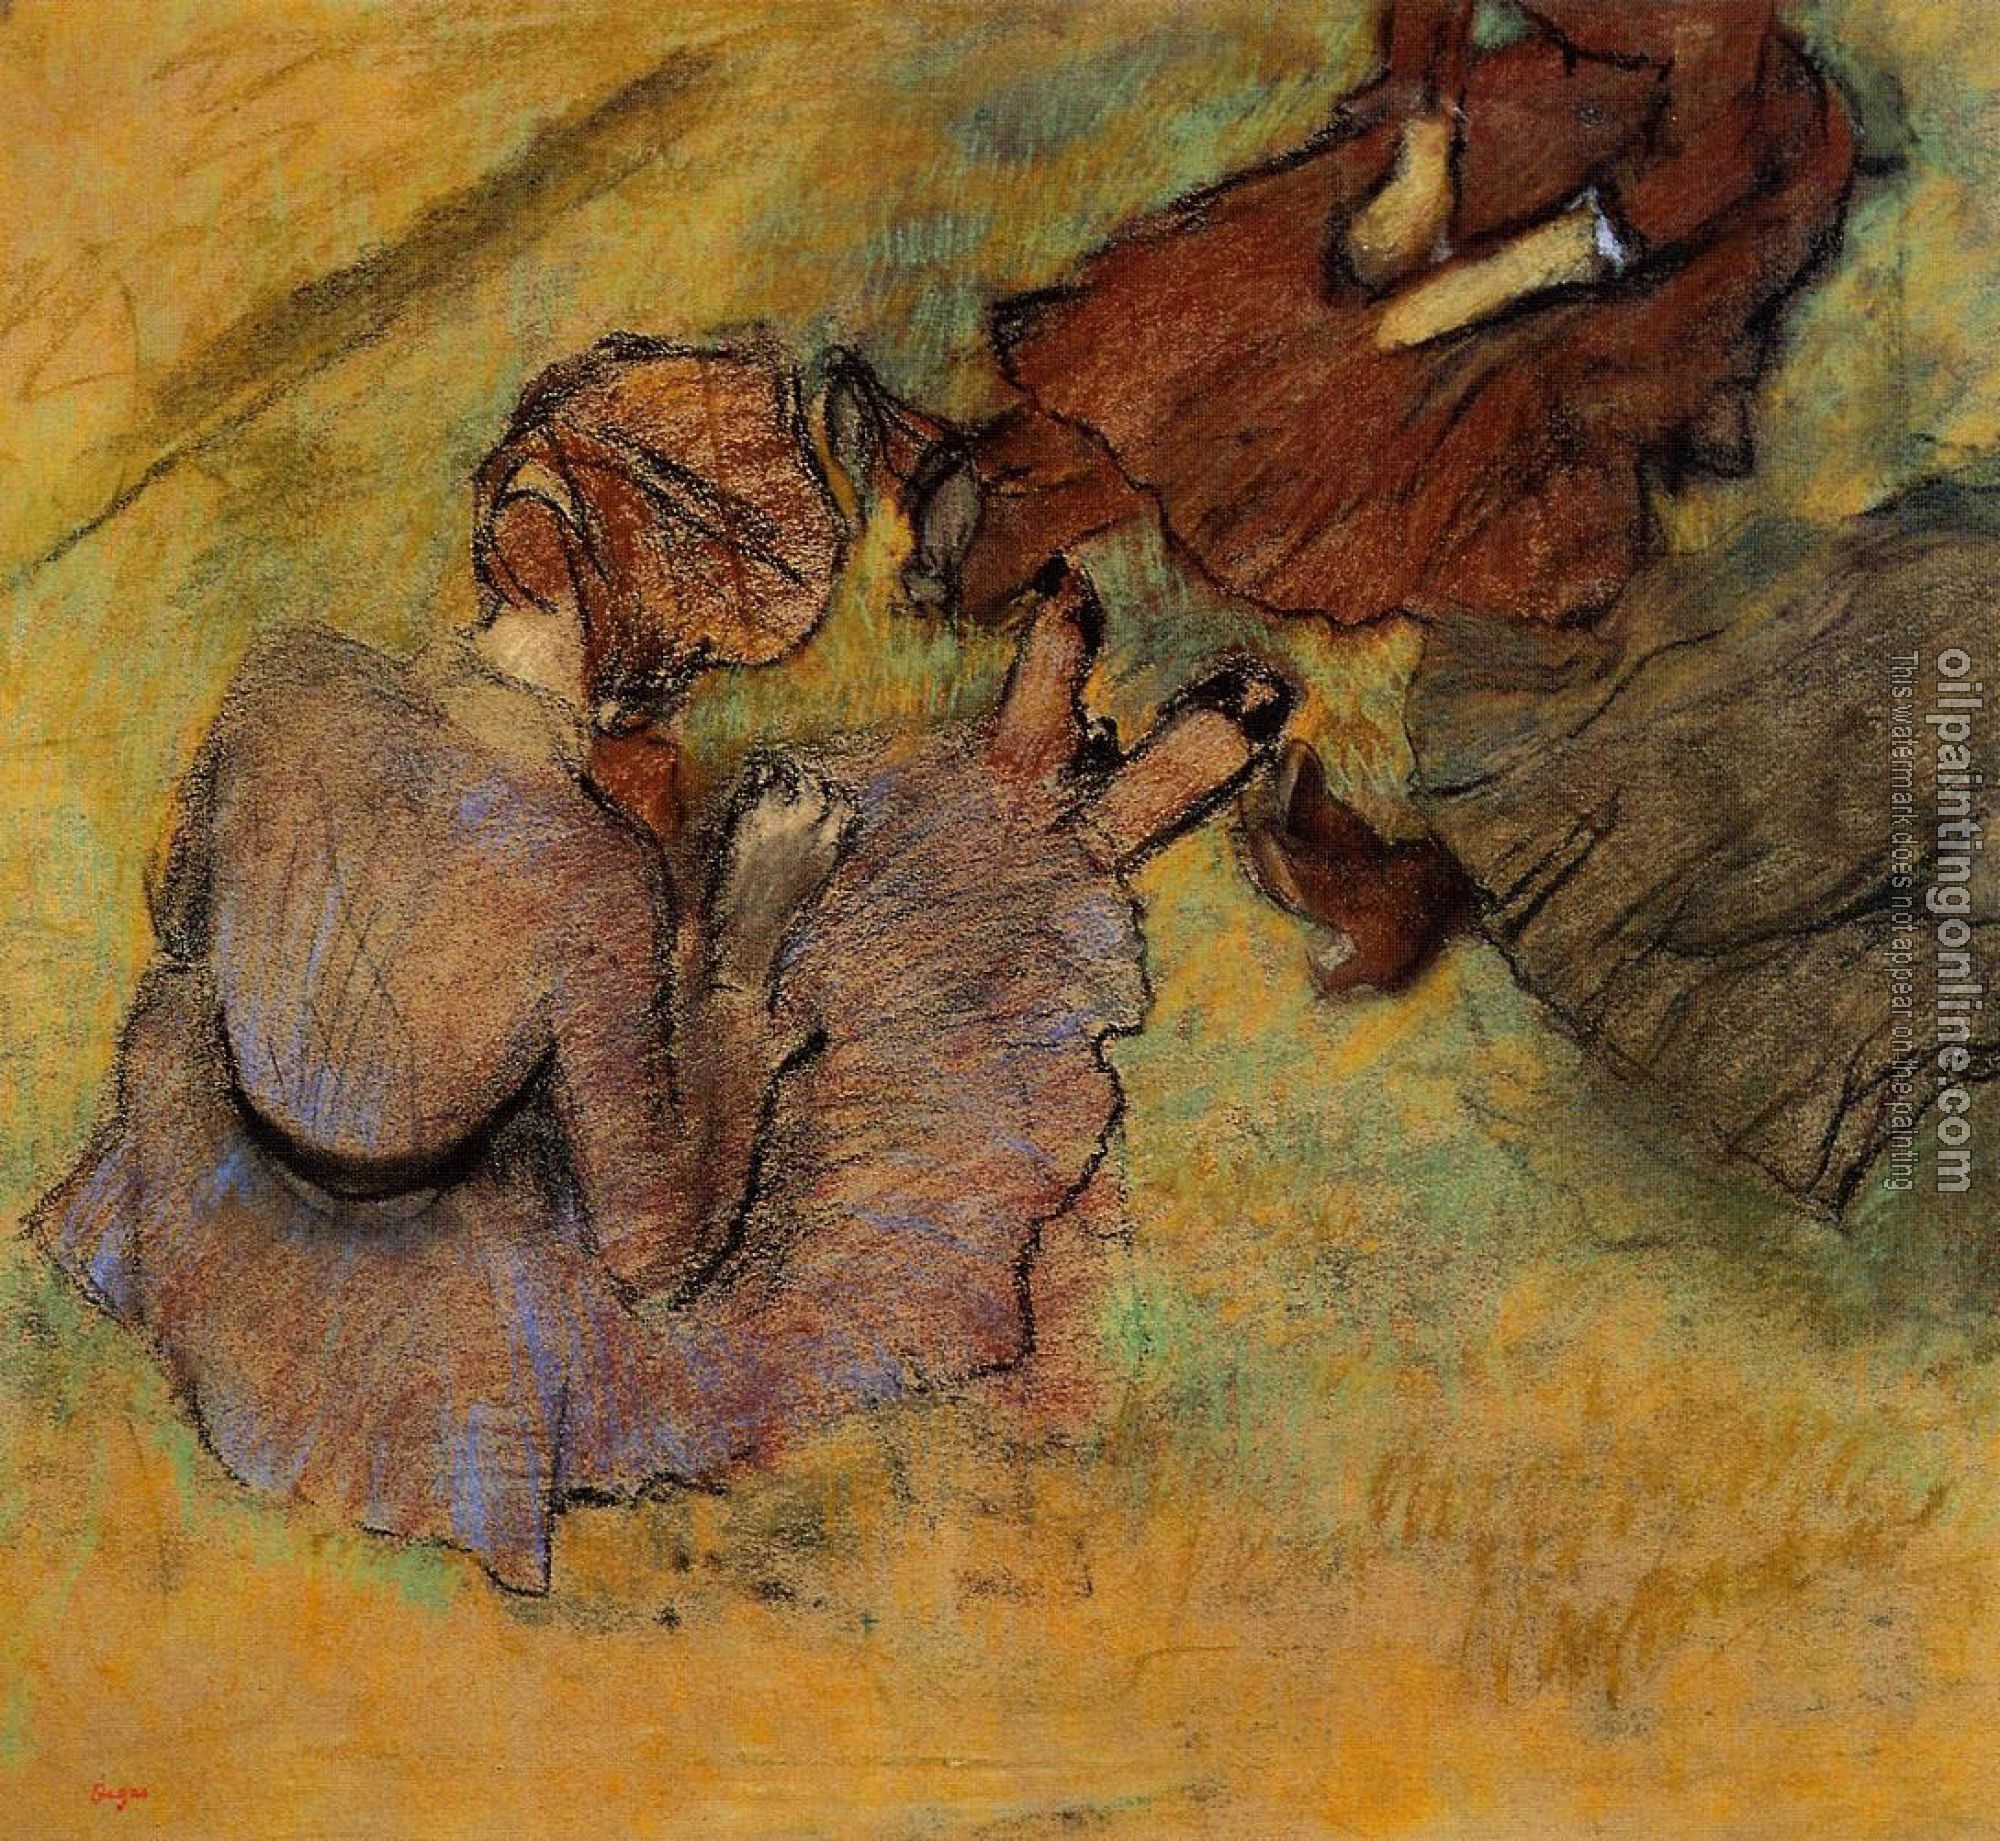 Degas, Edgar - Woman Seated on the Grass